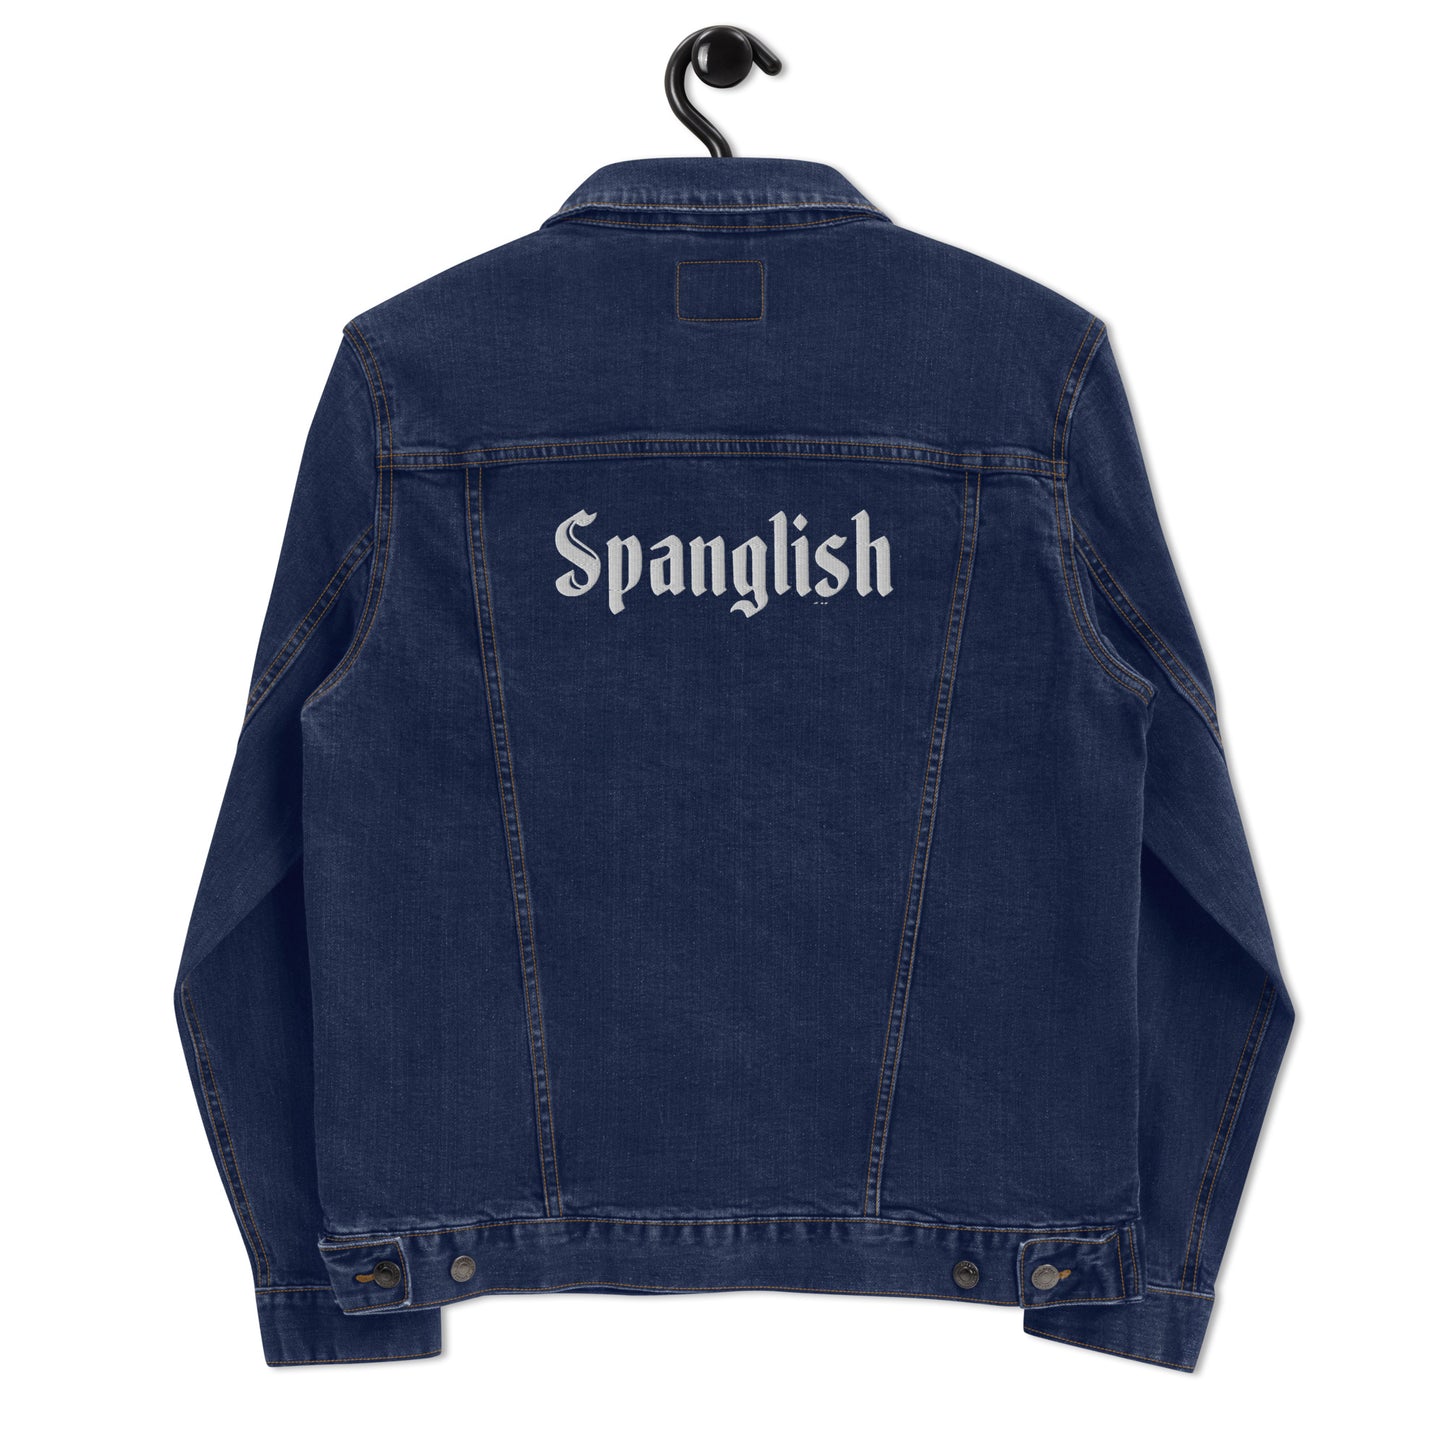 Spanglish Denim Jacket